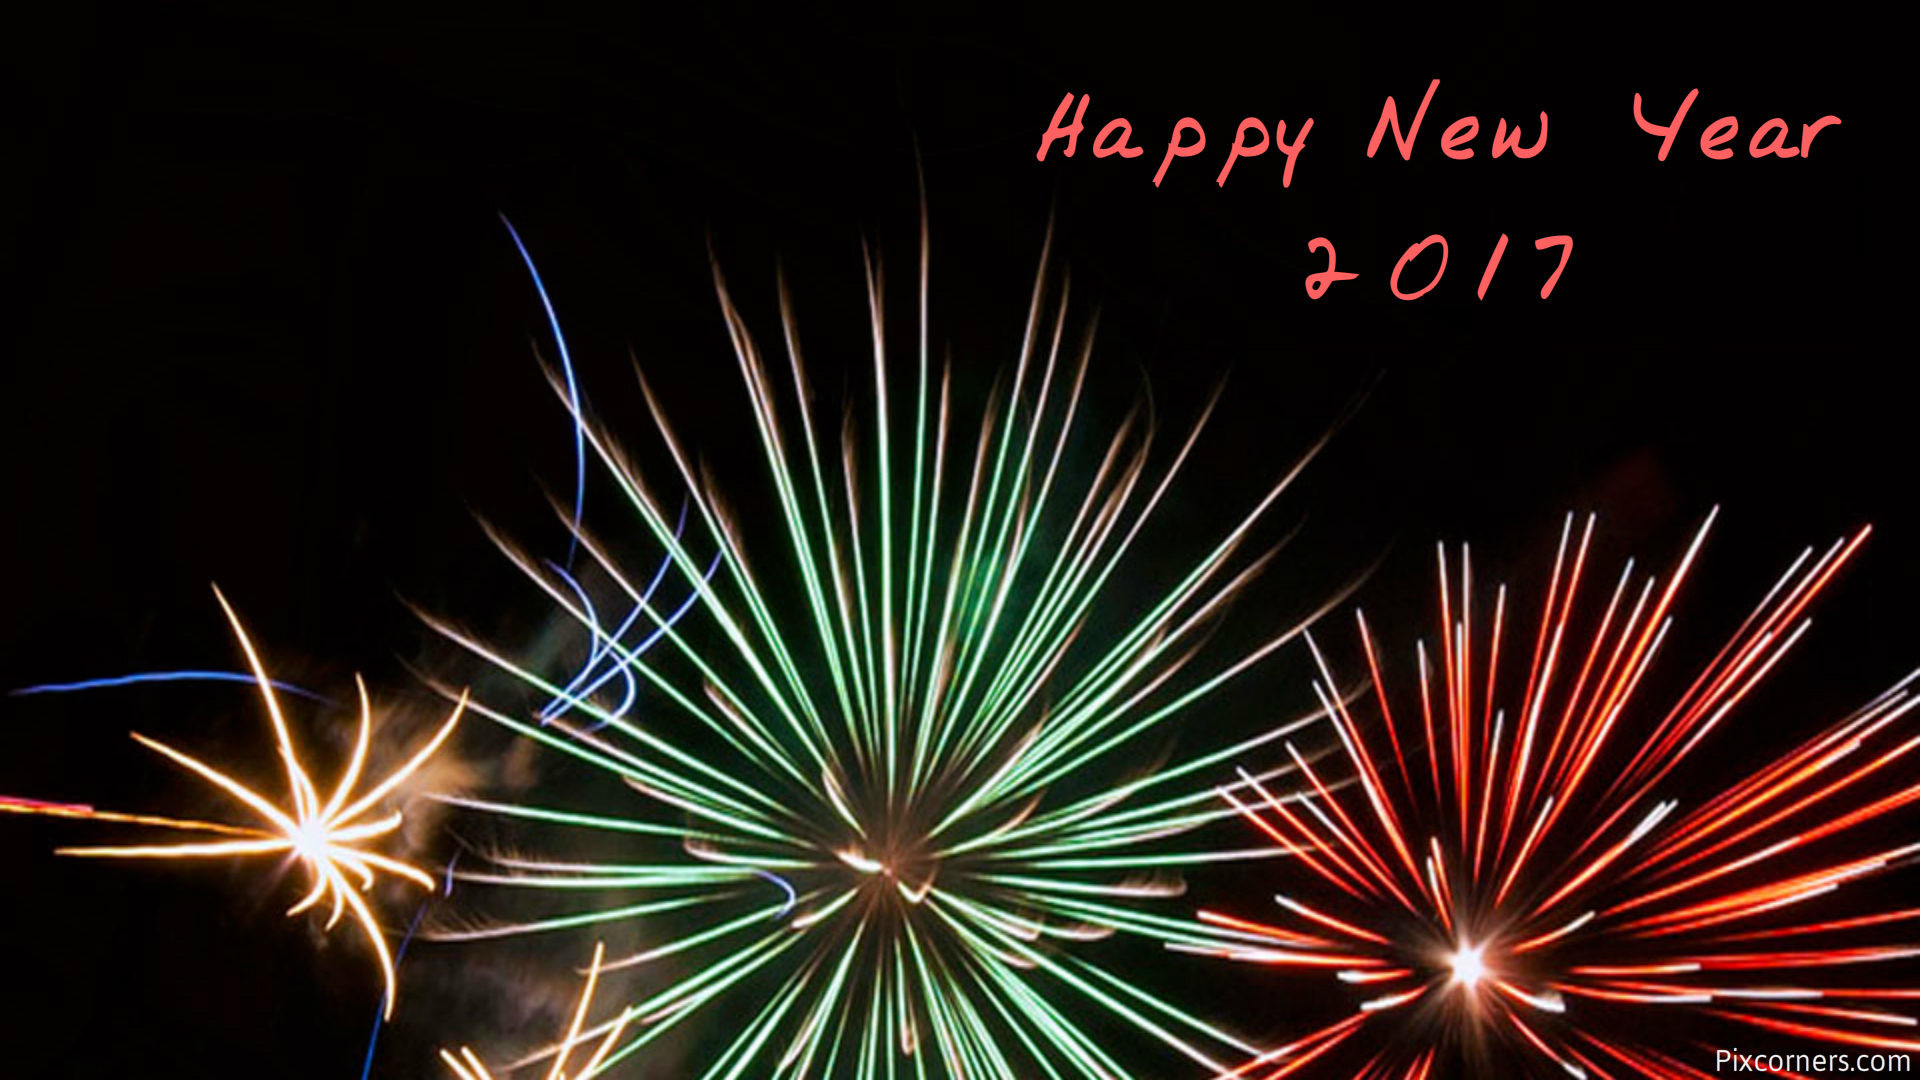 1920x1080 Happy New Year 2017 Wallpaper HD Fireworks